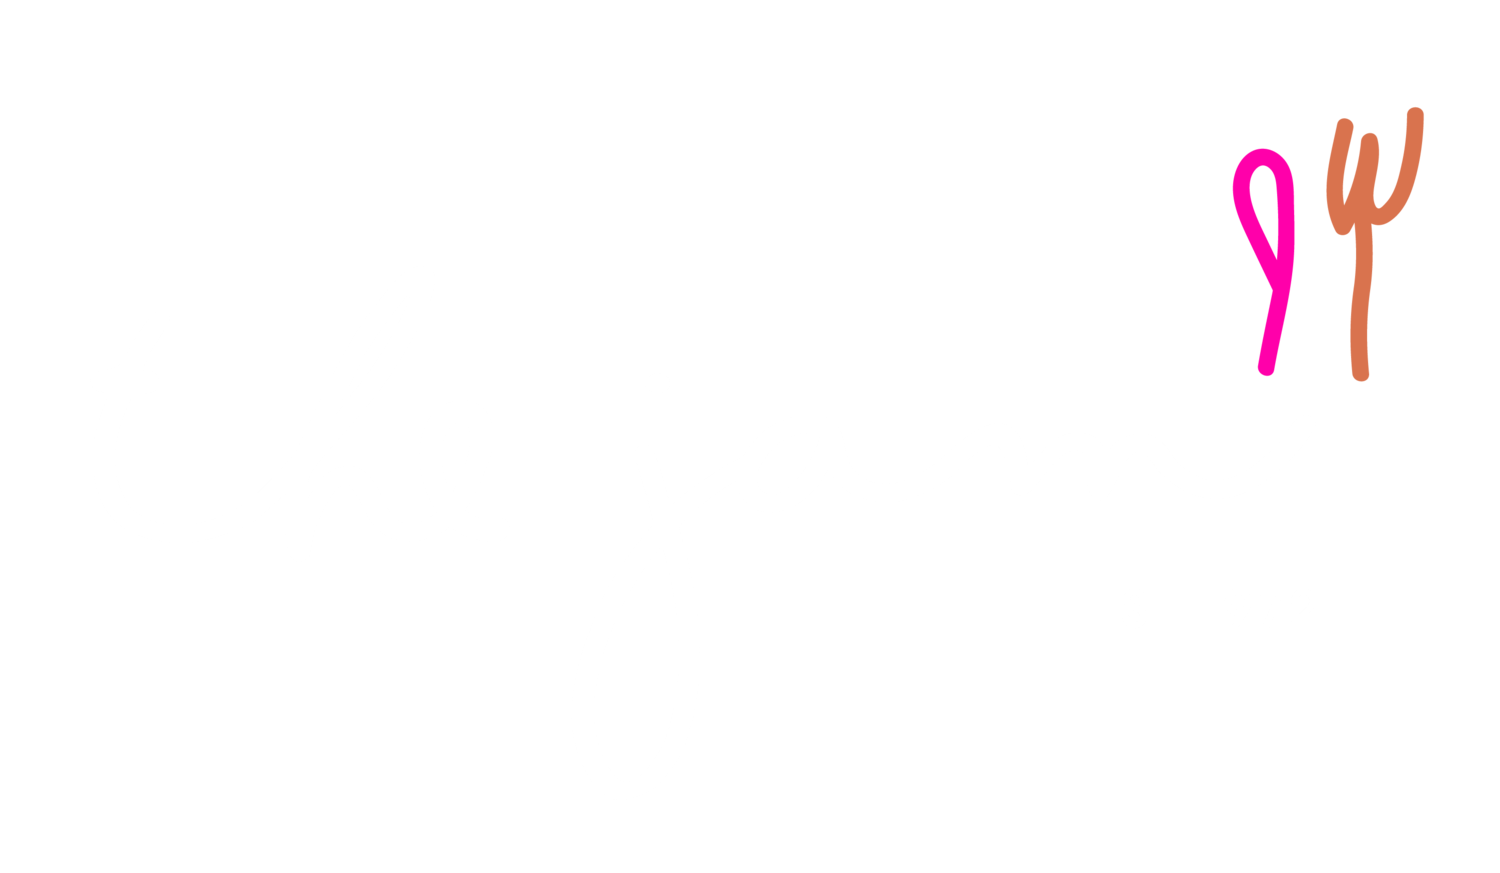 THE JAM